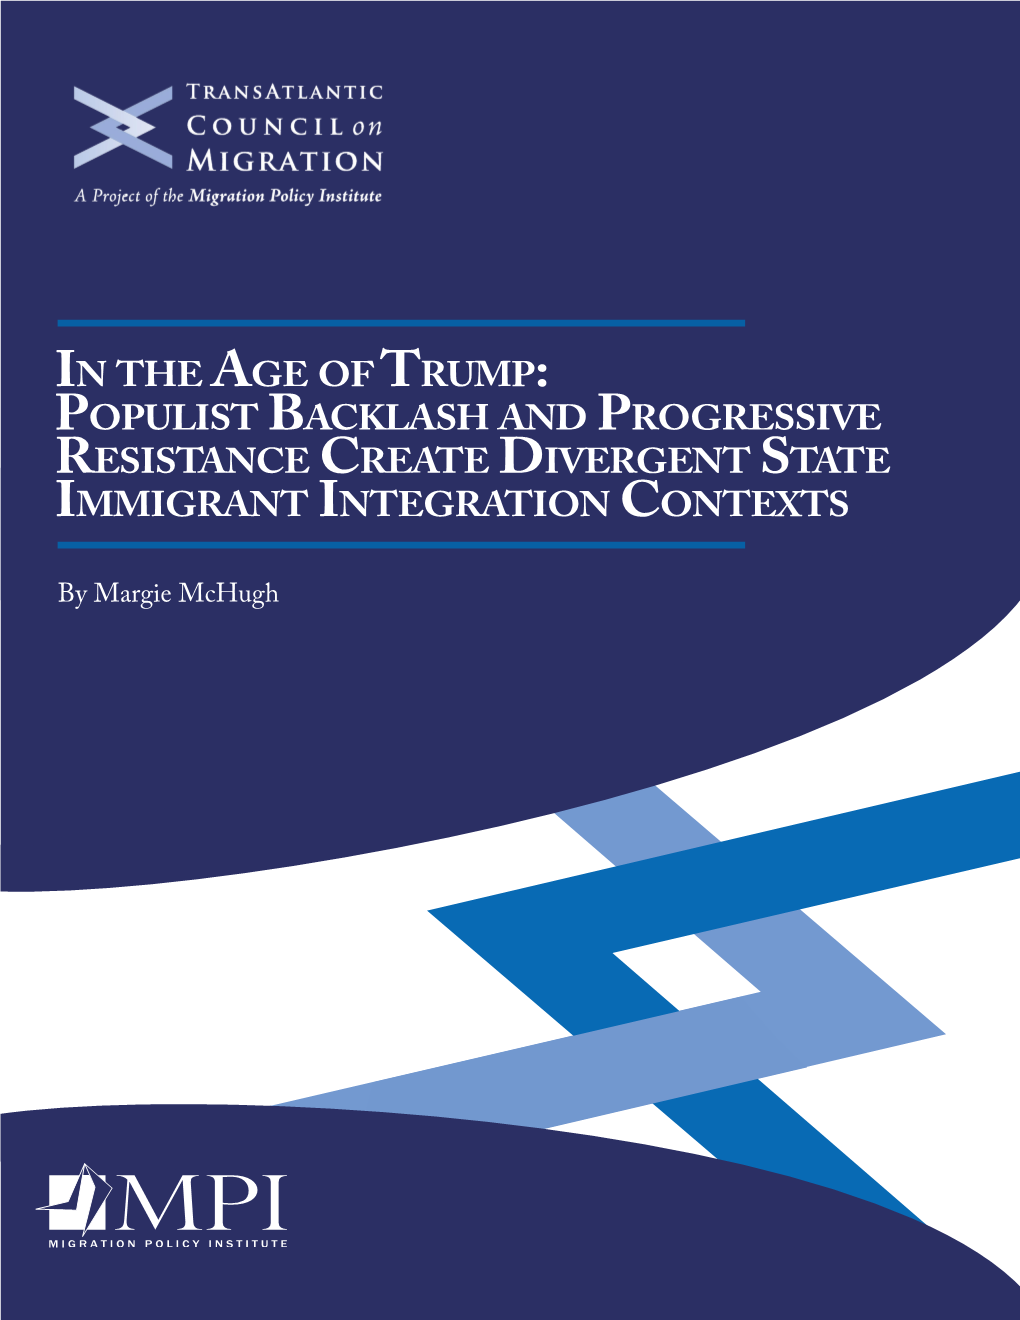 Populist Backlash and Progressive Resistance Create Divergent State Immigrant Integration Contexts